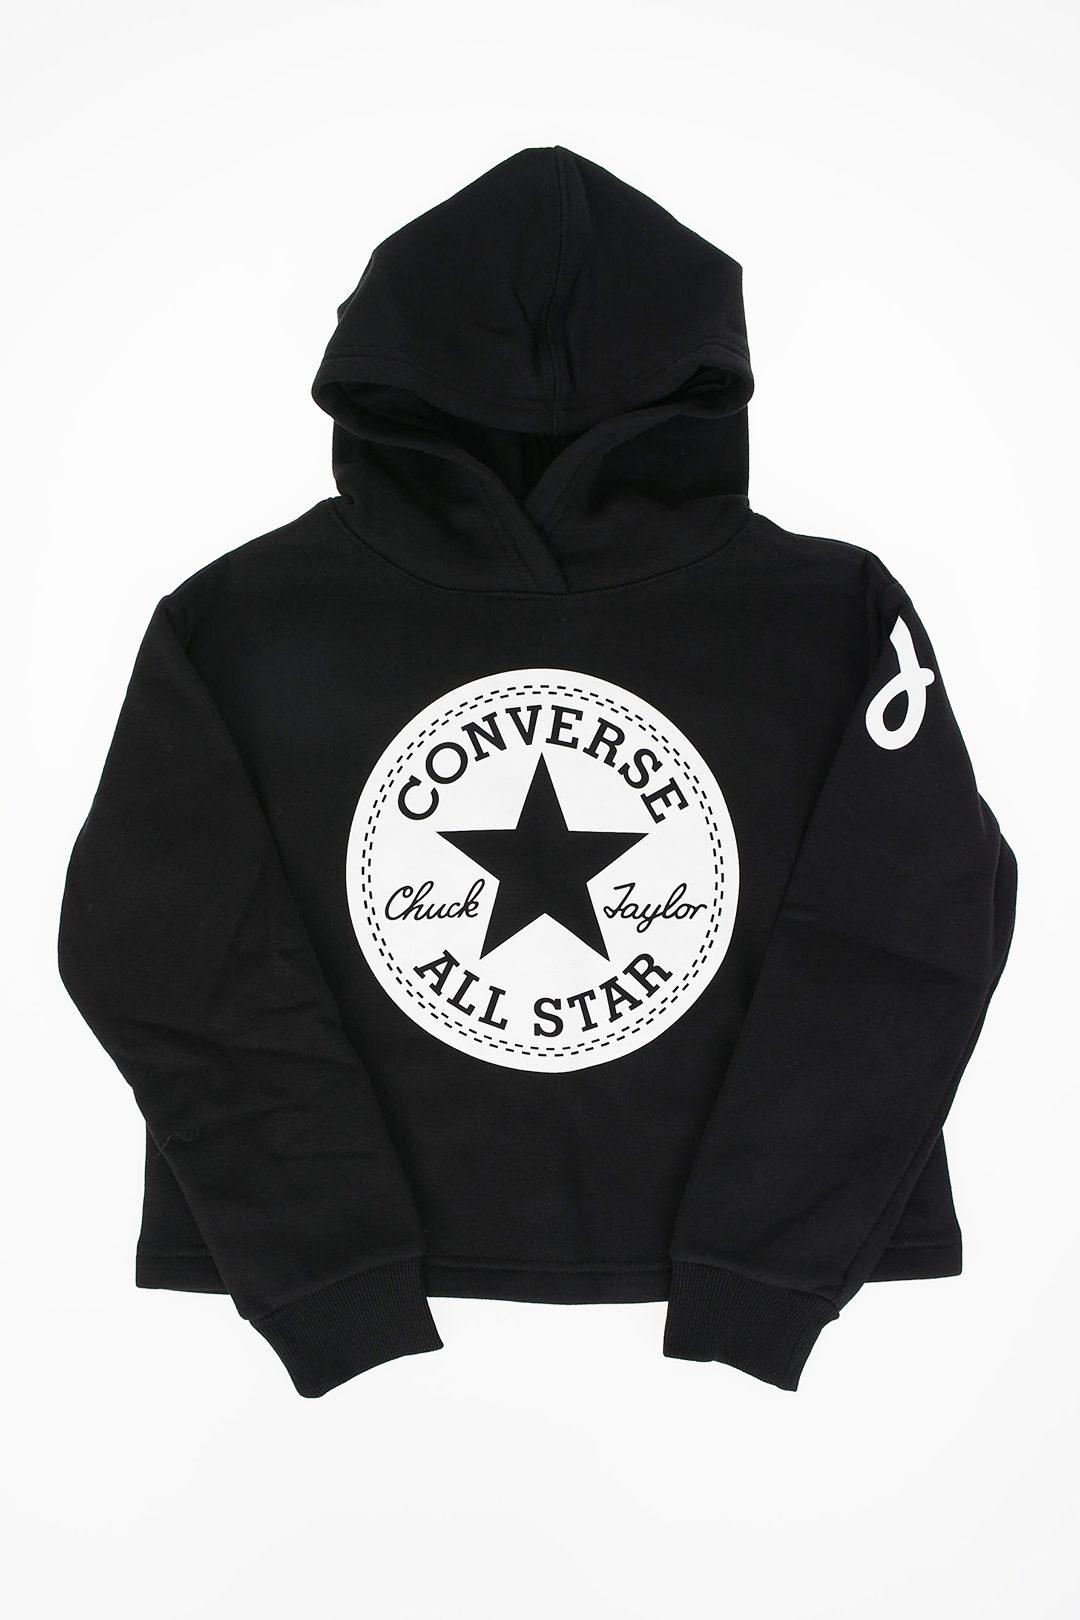 Converse KIDS ALL STAR Hoodie Sweatshirt girls - Glamood Outlet